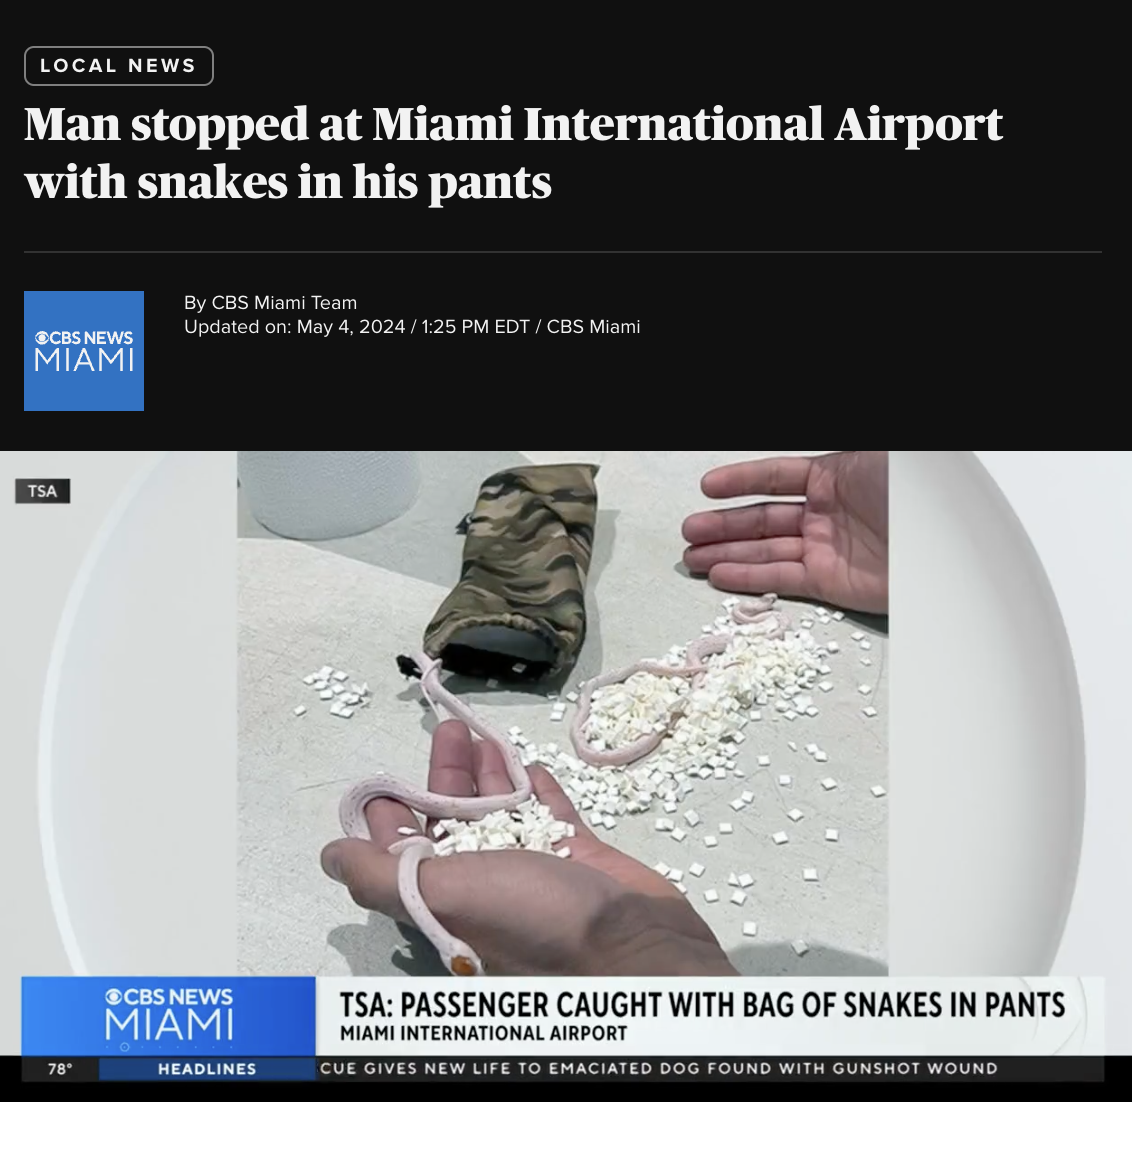 Miami International Airport - Local News Man stopped at Miami International Airport with snakes in his pants Bcbs News Miami Tsa 78 By Cbs Miami Team Updated on EdtCbs Miami Cbs News Miami Headlines Tsa Passenger Caught With Bag Of Snakes In Pants Miami I